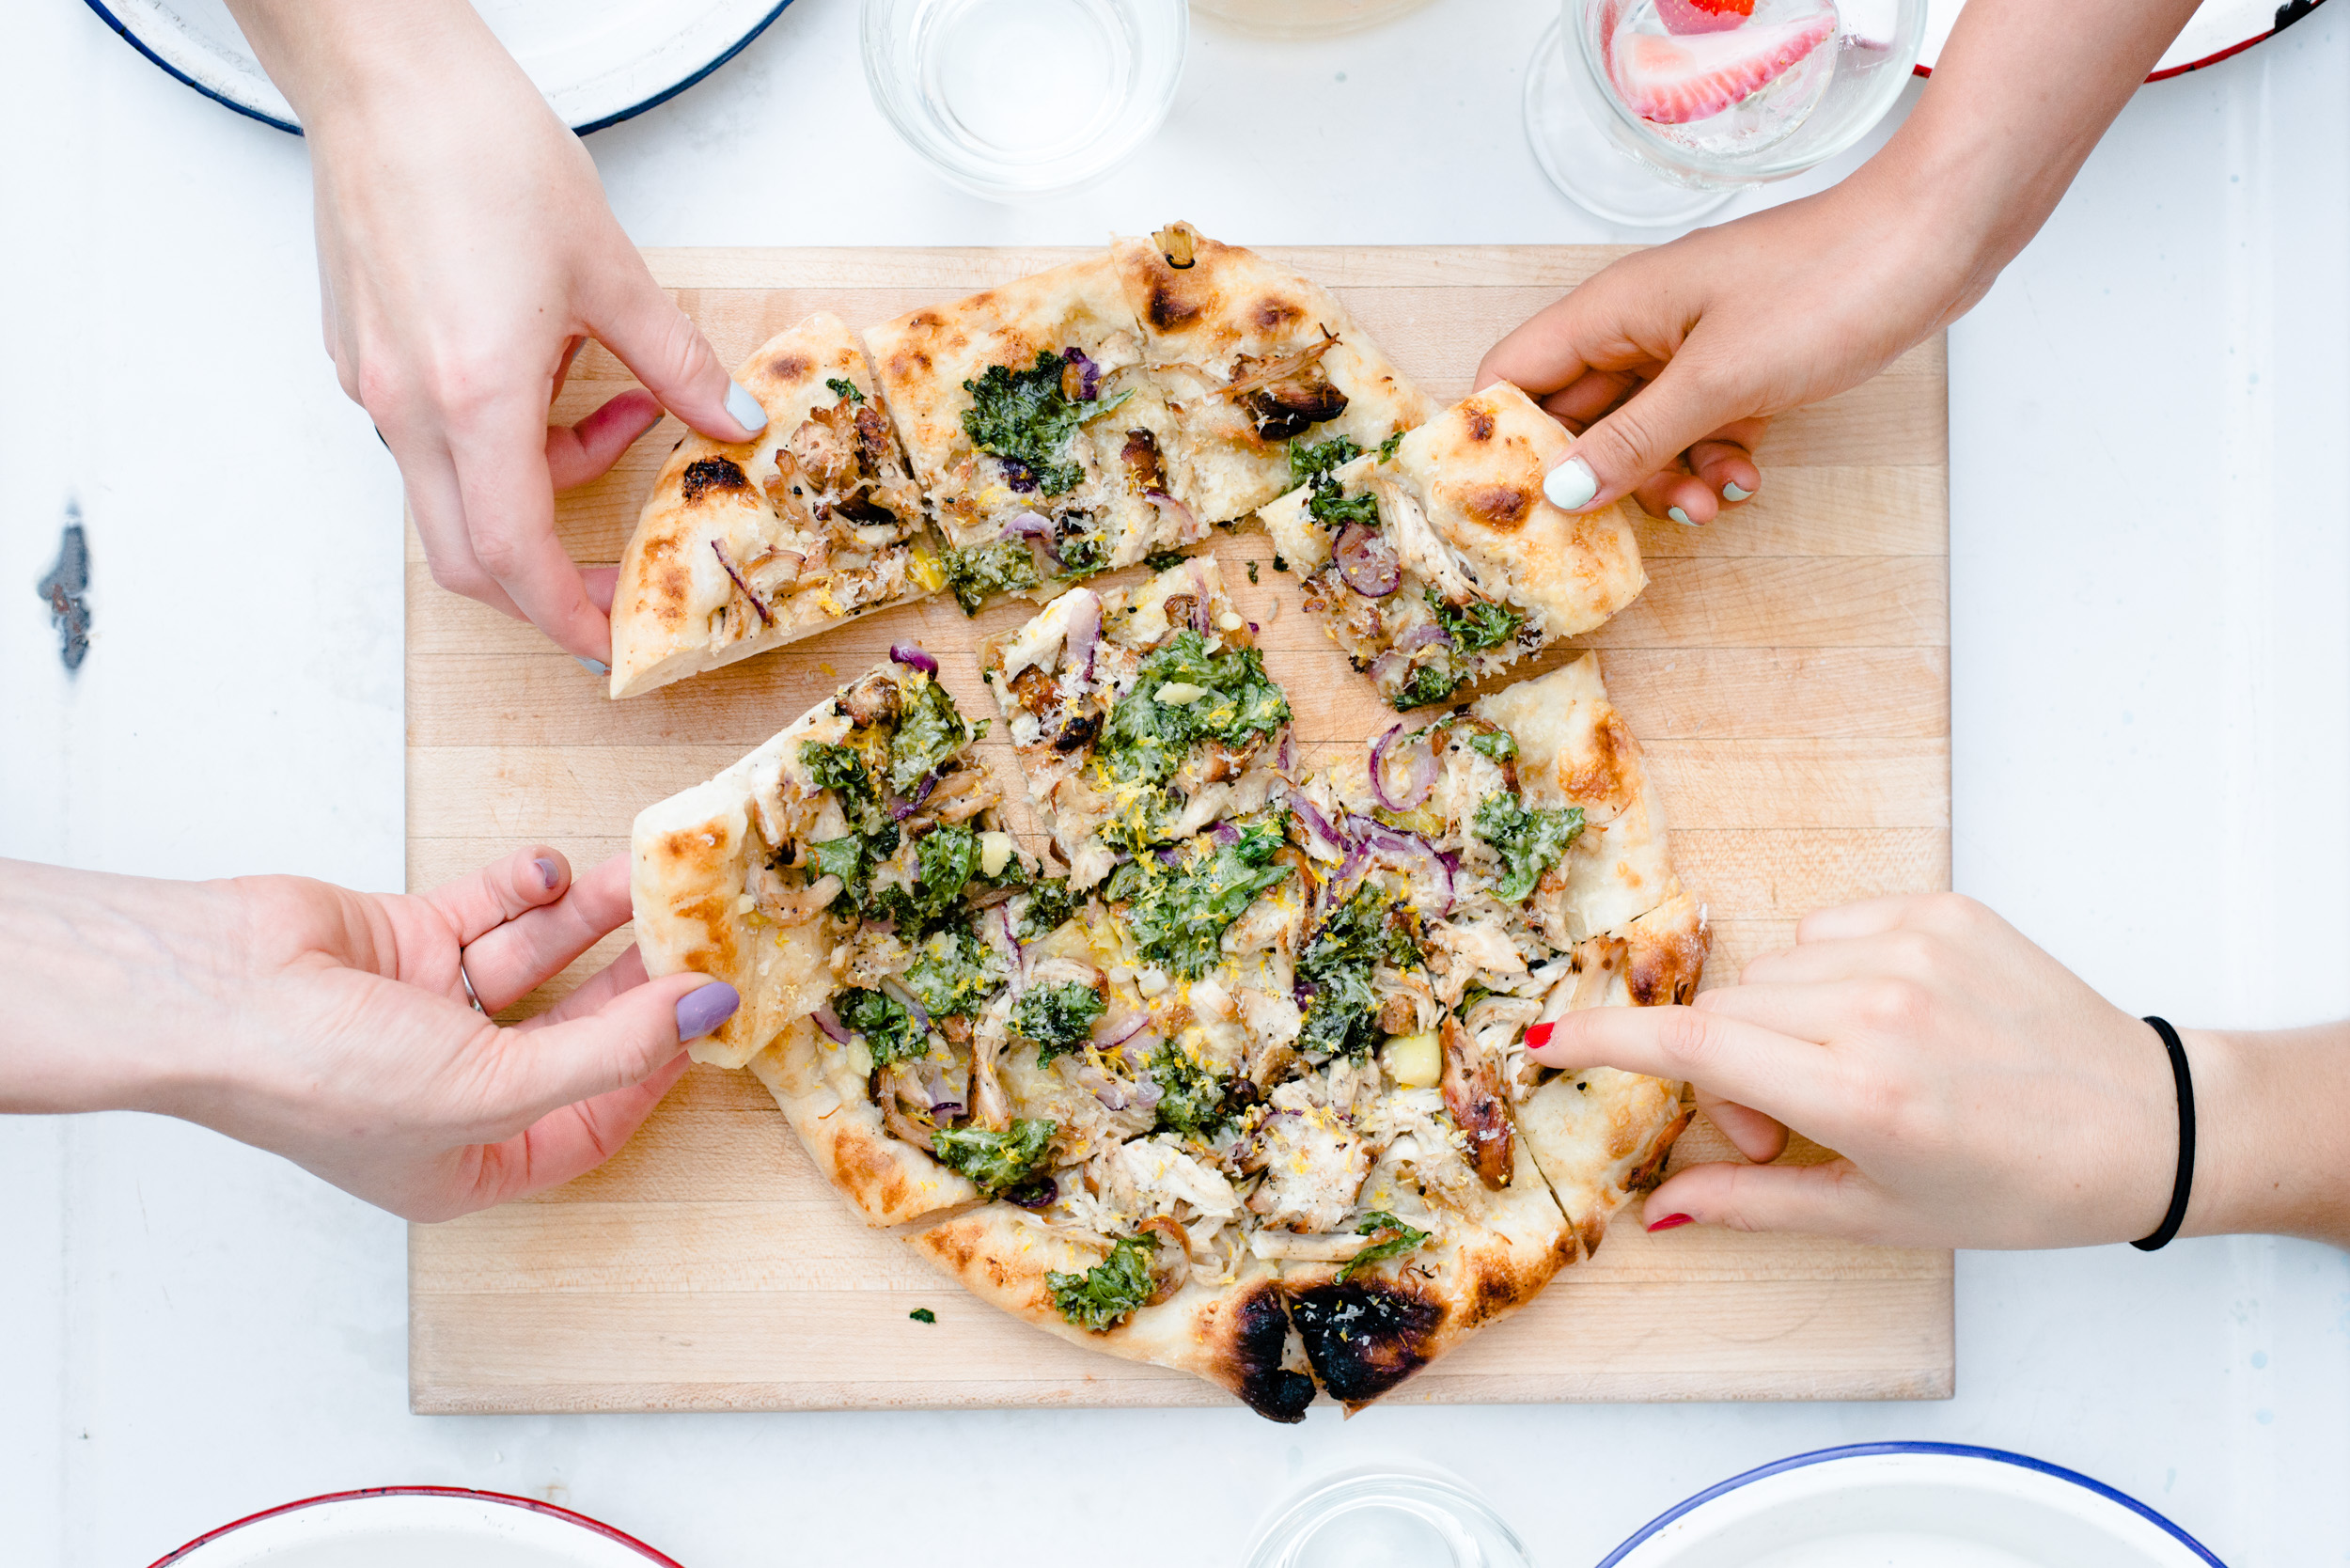 Pizza Party - Six great pizza recipes + a no-knead dough!